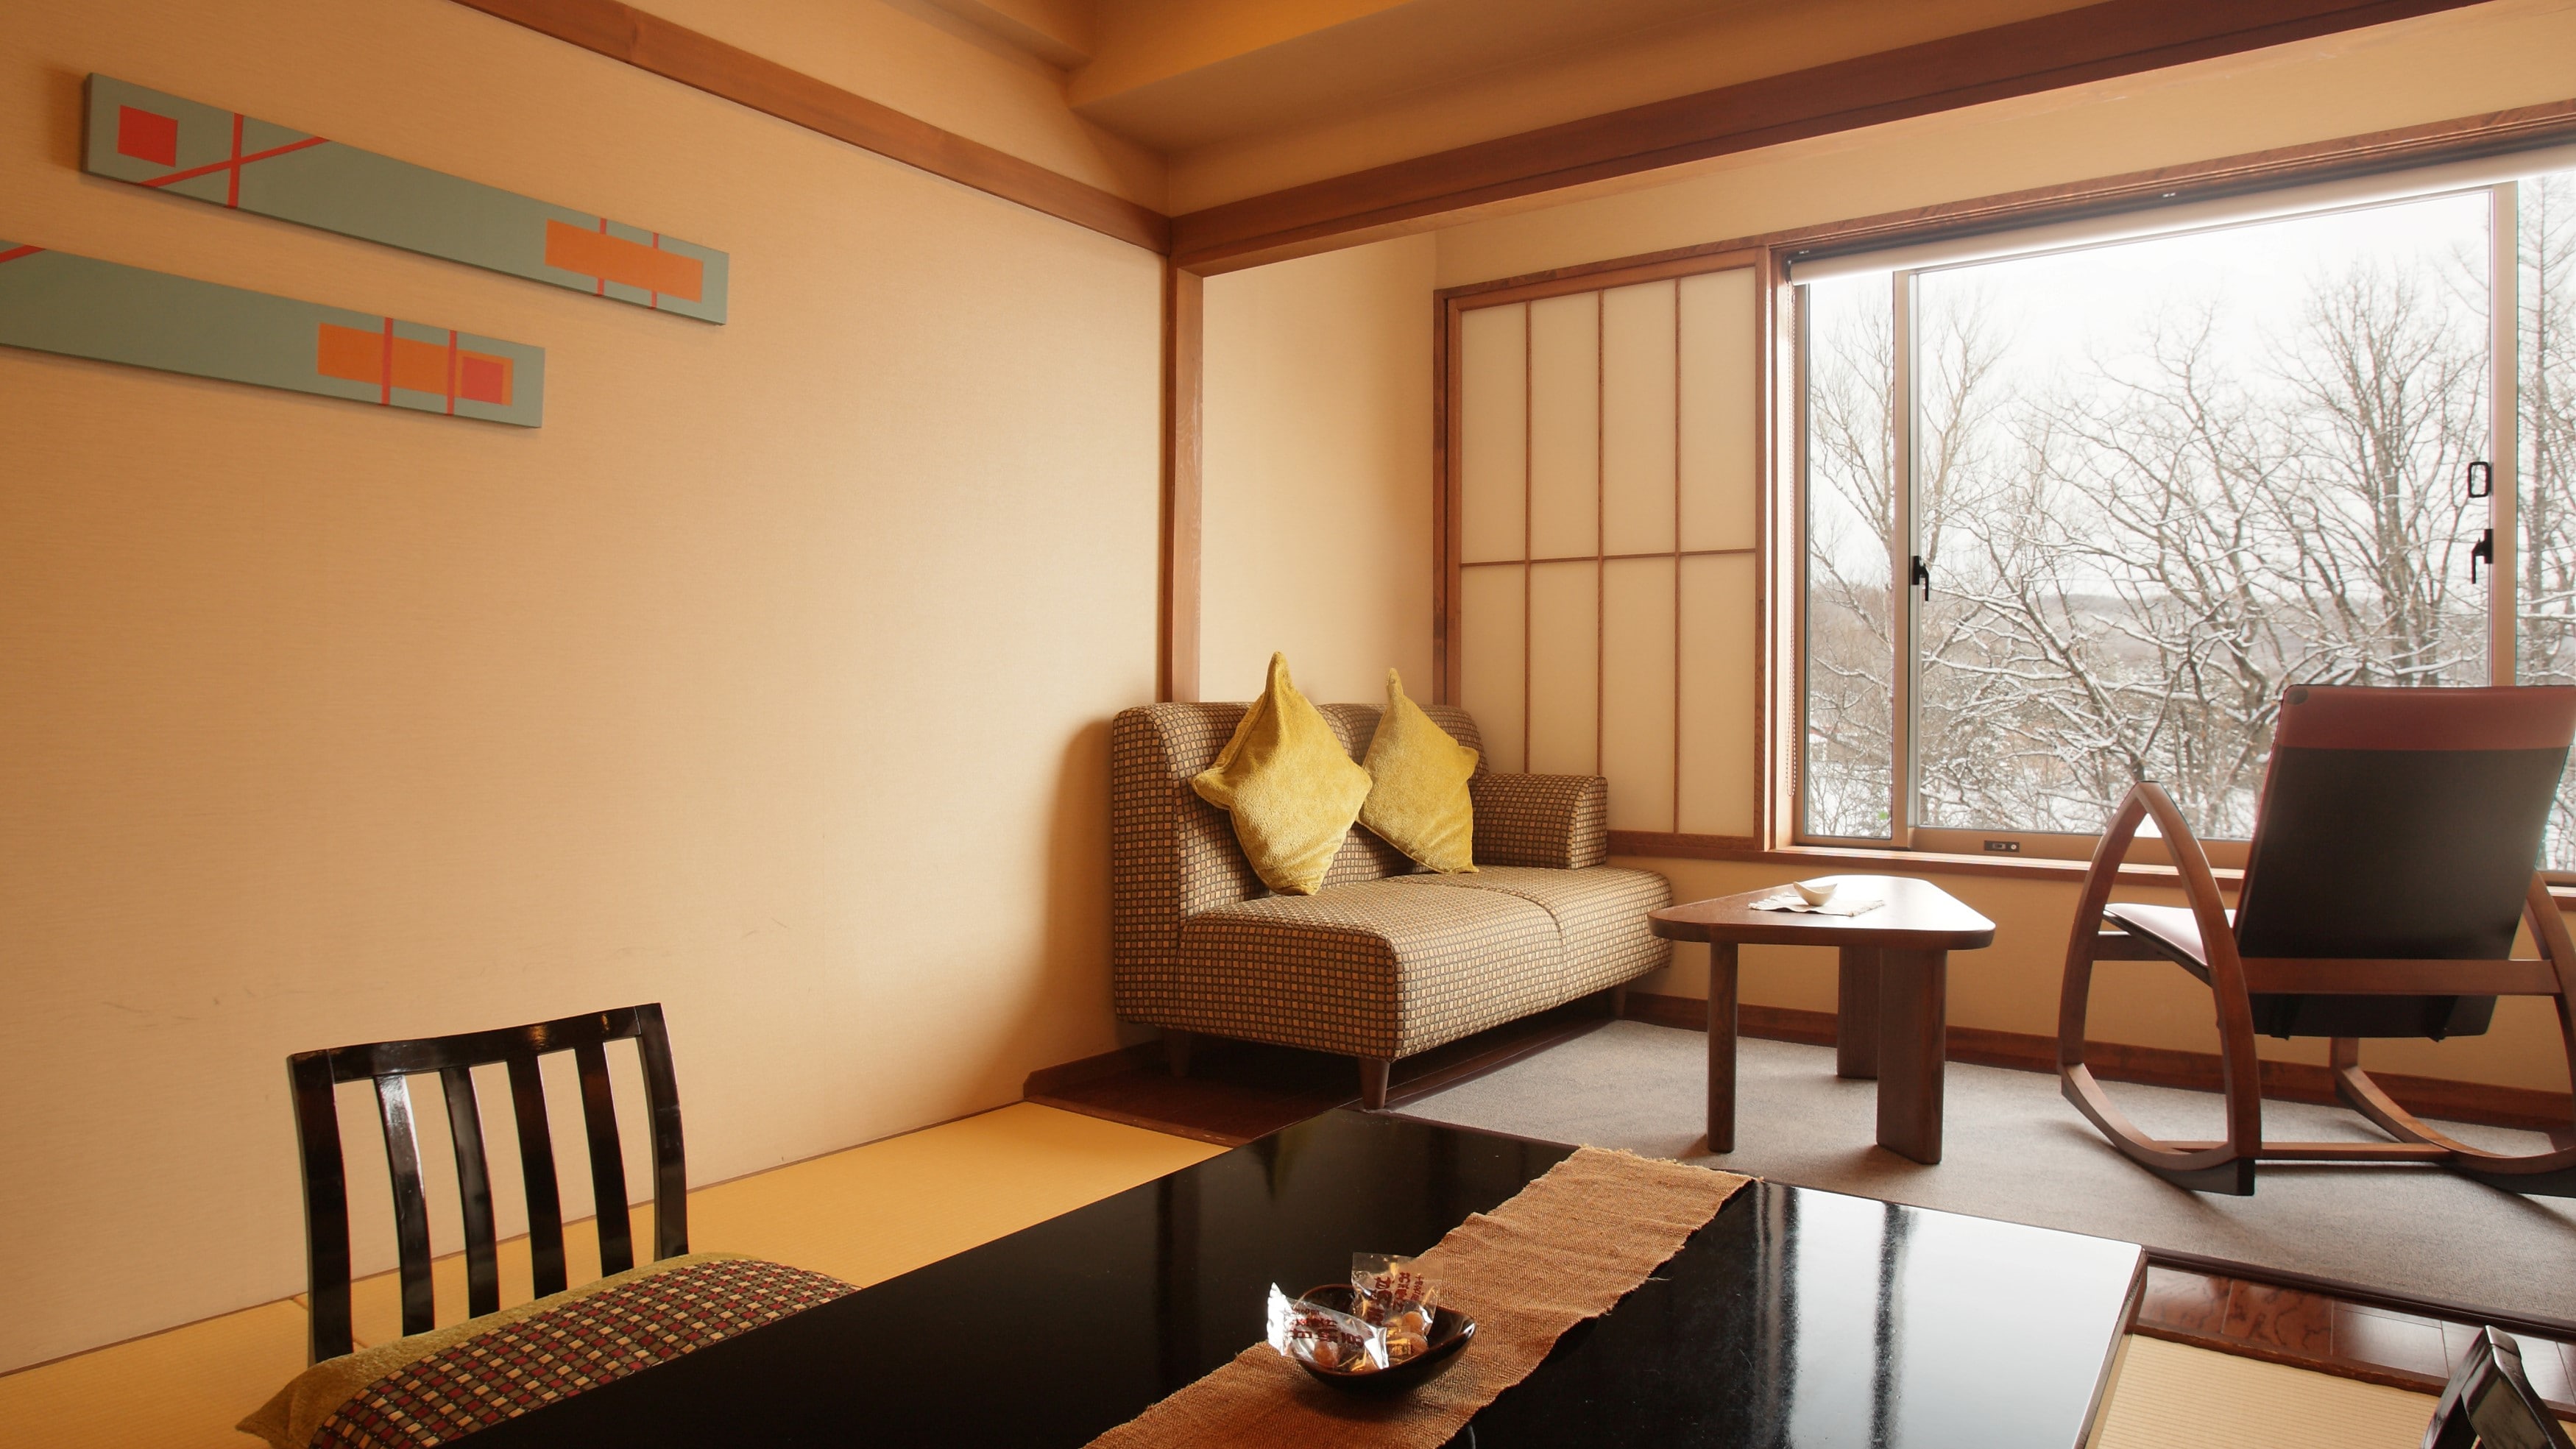 [Mameyotei] Kamar bergaya Jepang modern Jepang, contoh kamar tamu